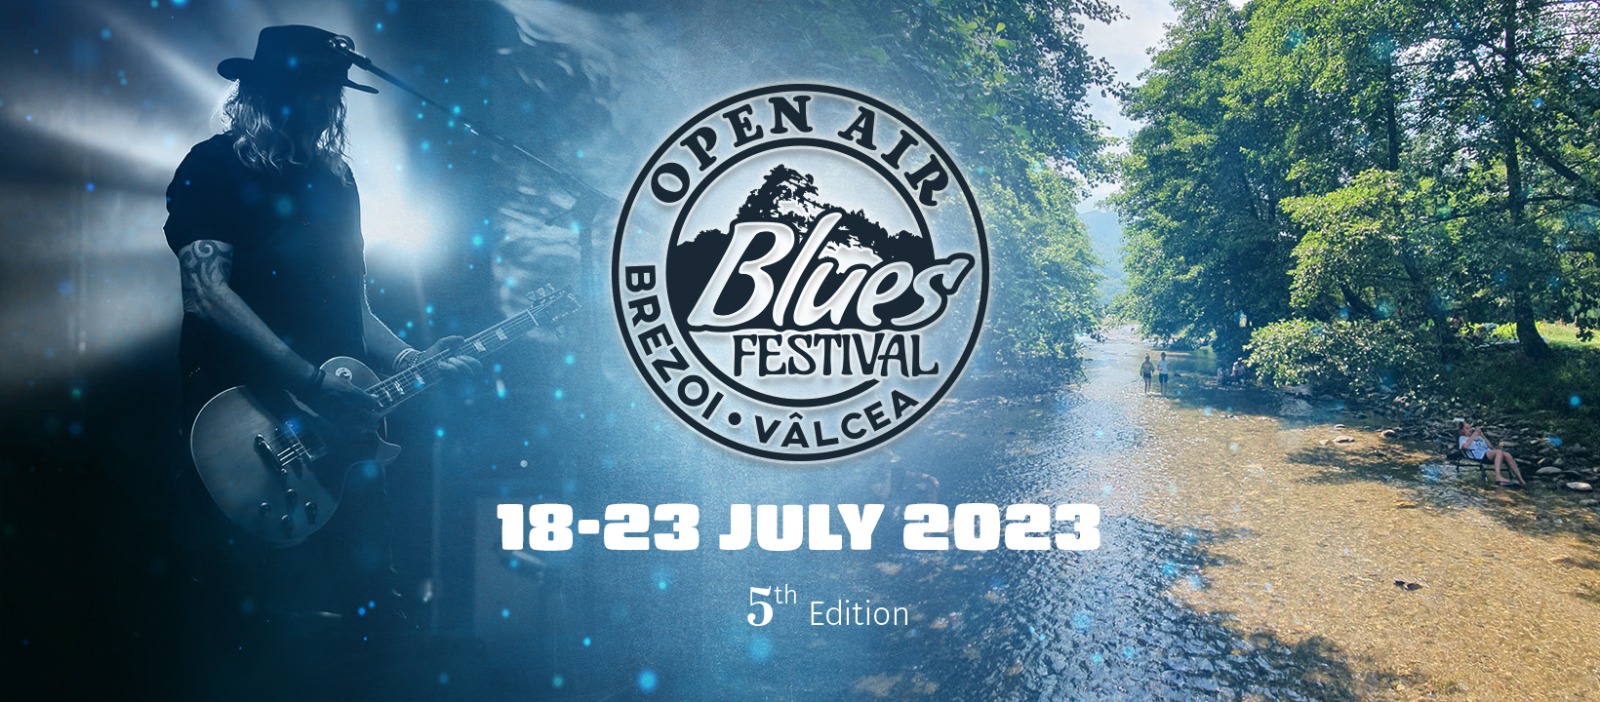 Brezoi Open Air Blues Festival